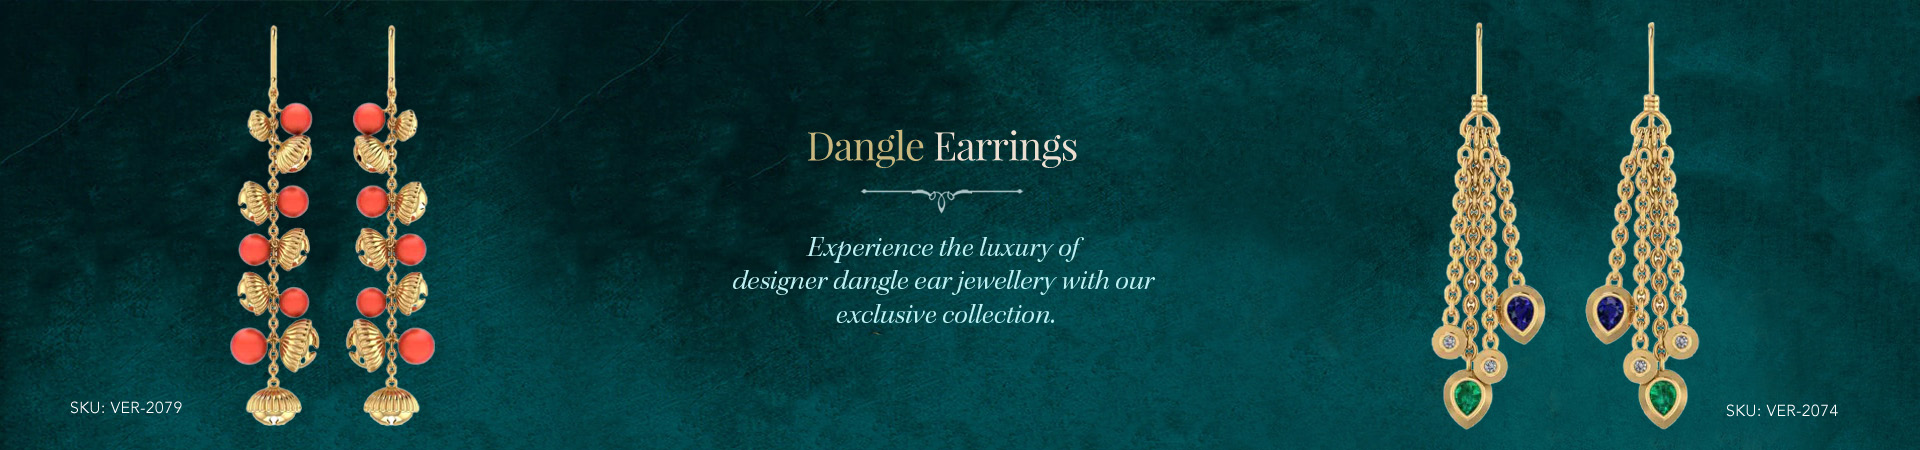 Gold Dangles Earrings Online 